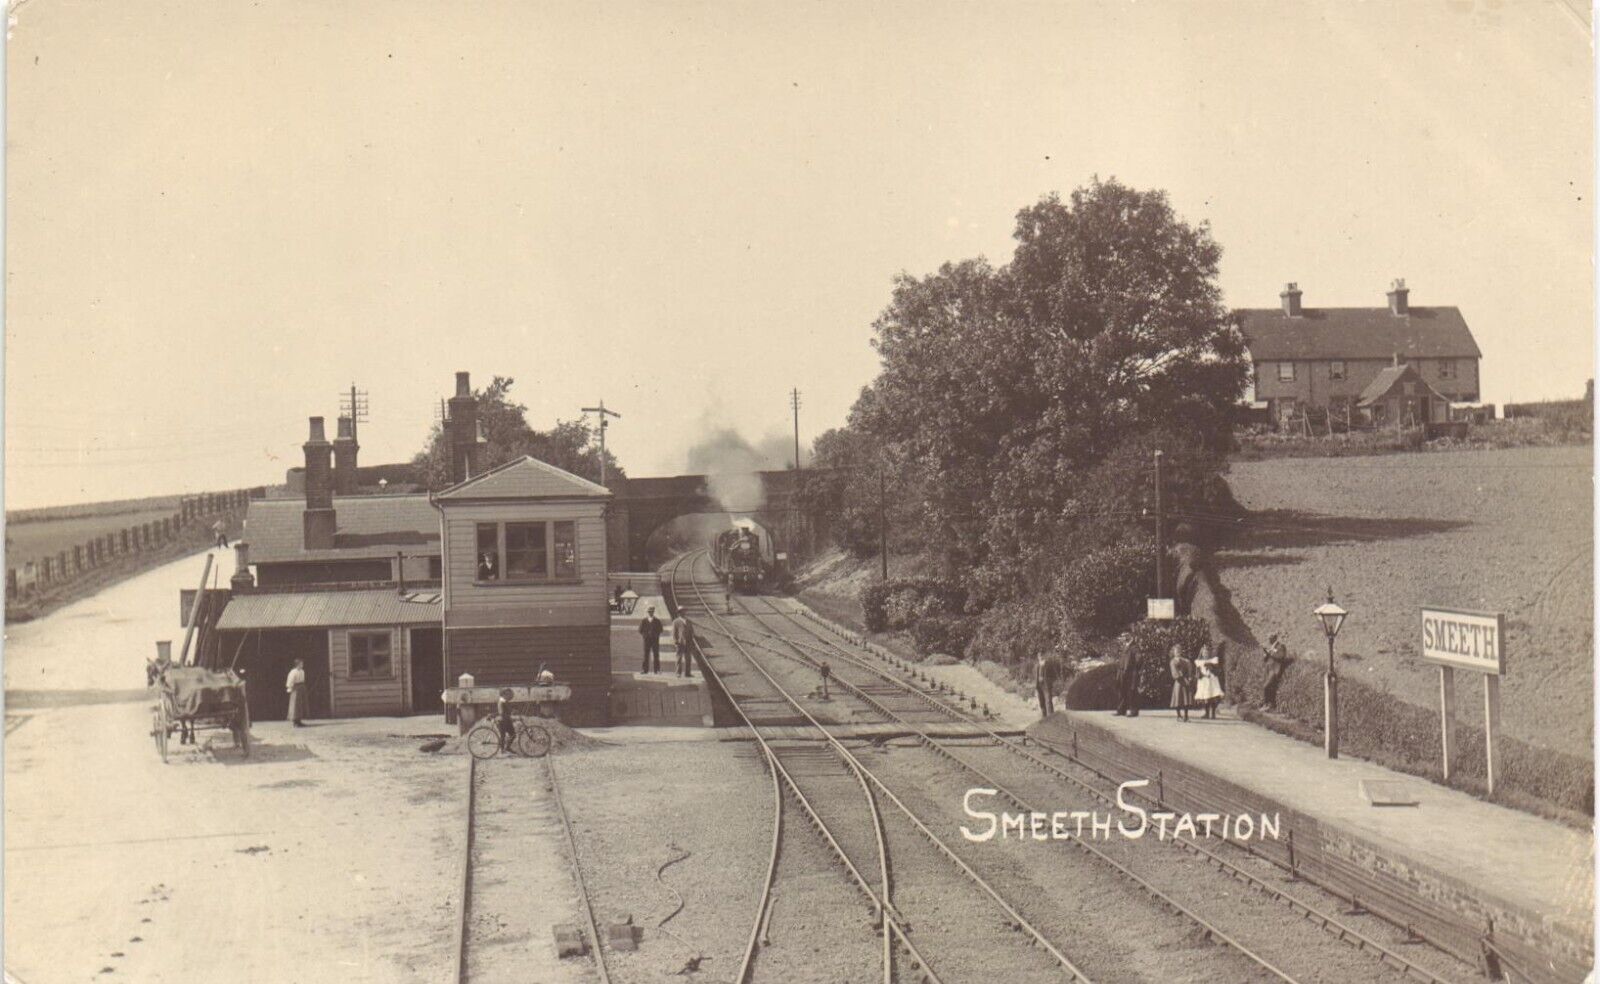 Smeeth railway station